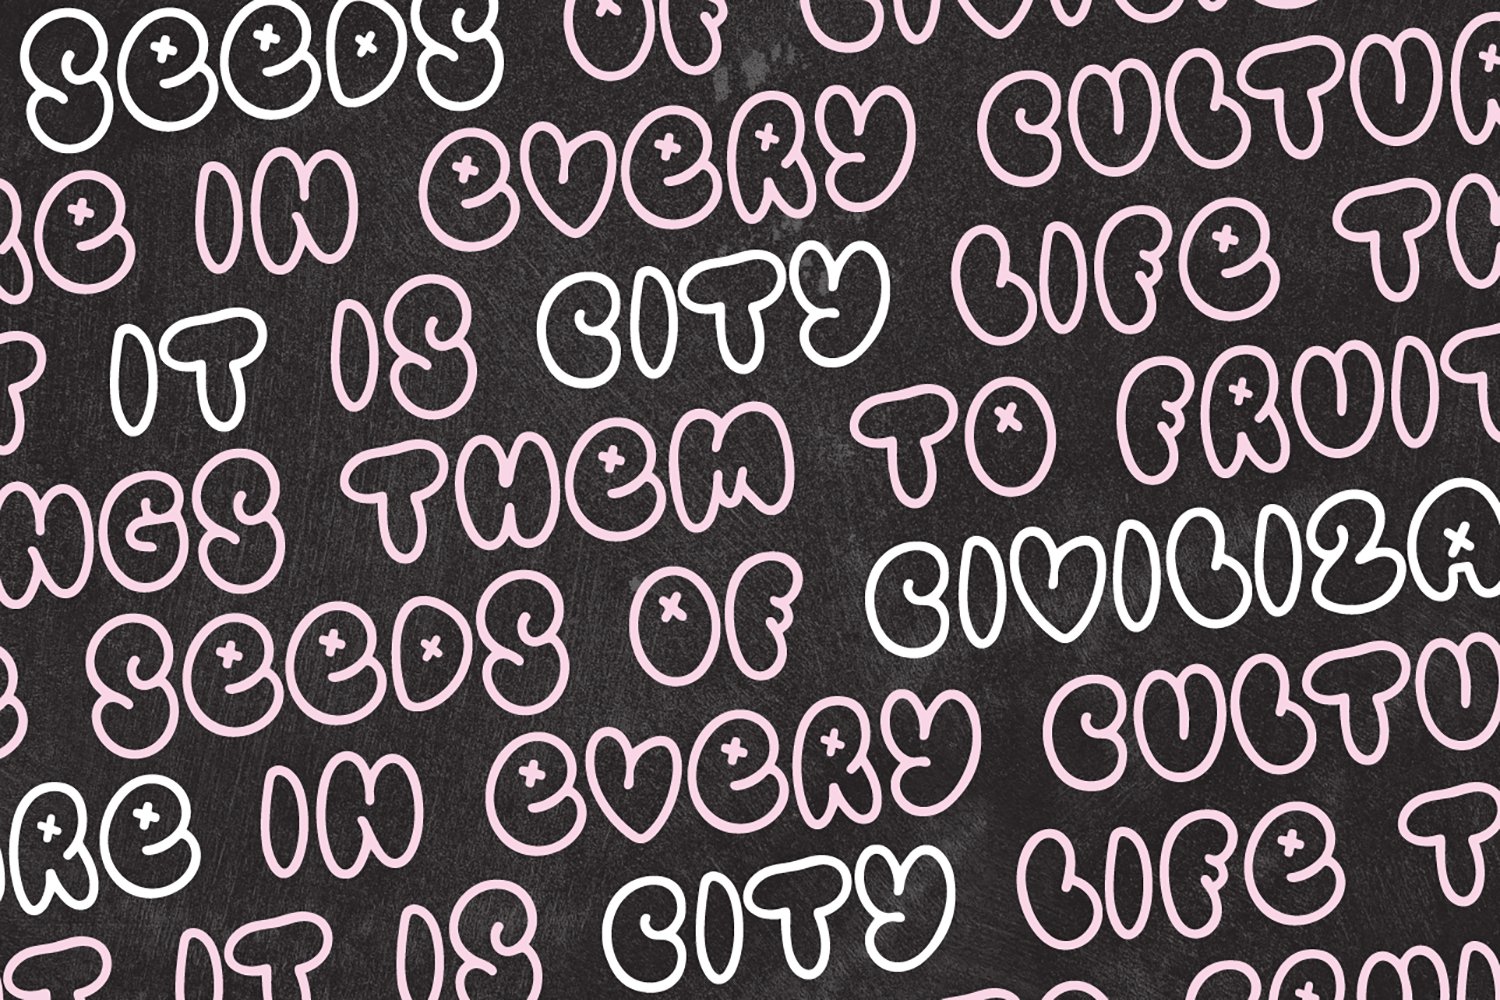 URBAN ROSE Cute Bubble Graffiti Font preview image.